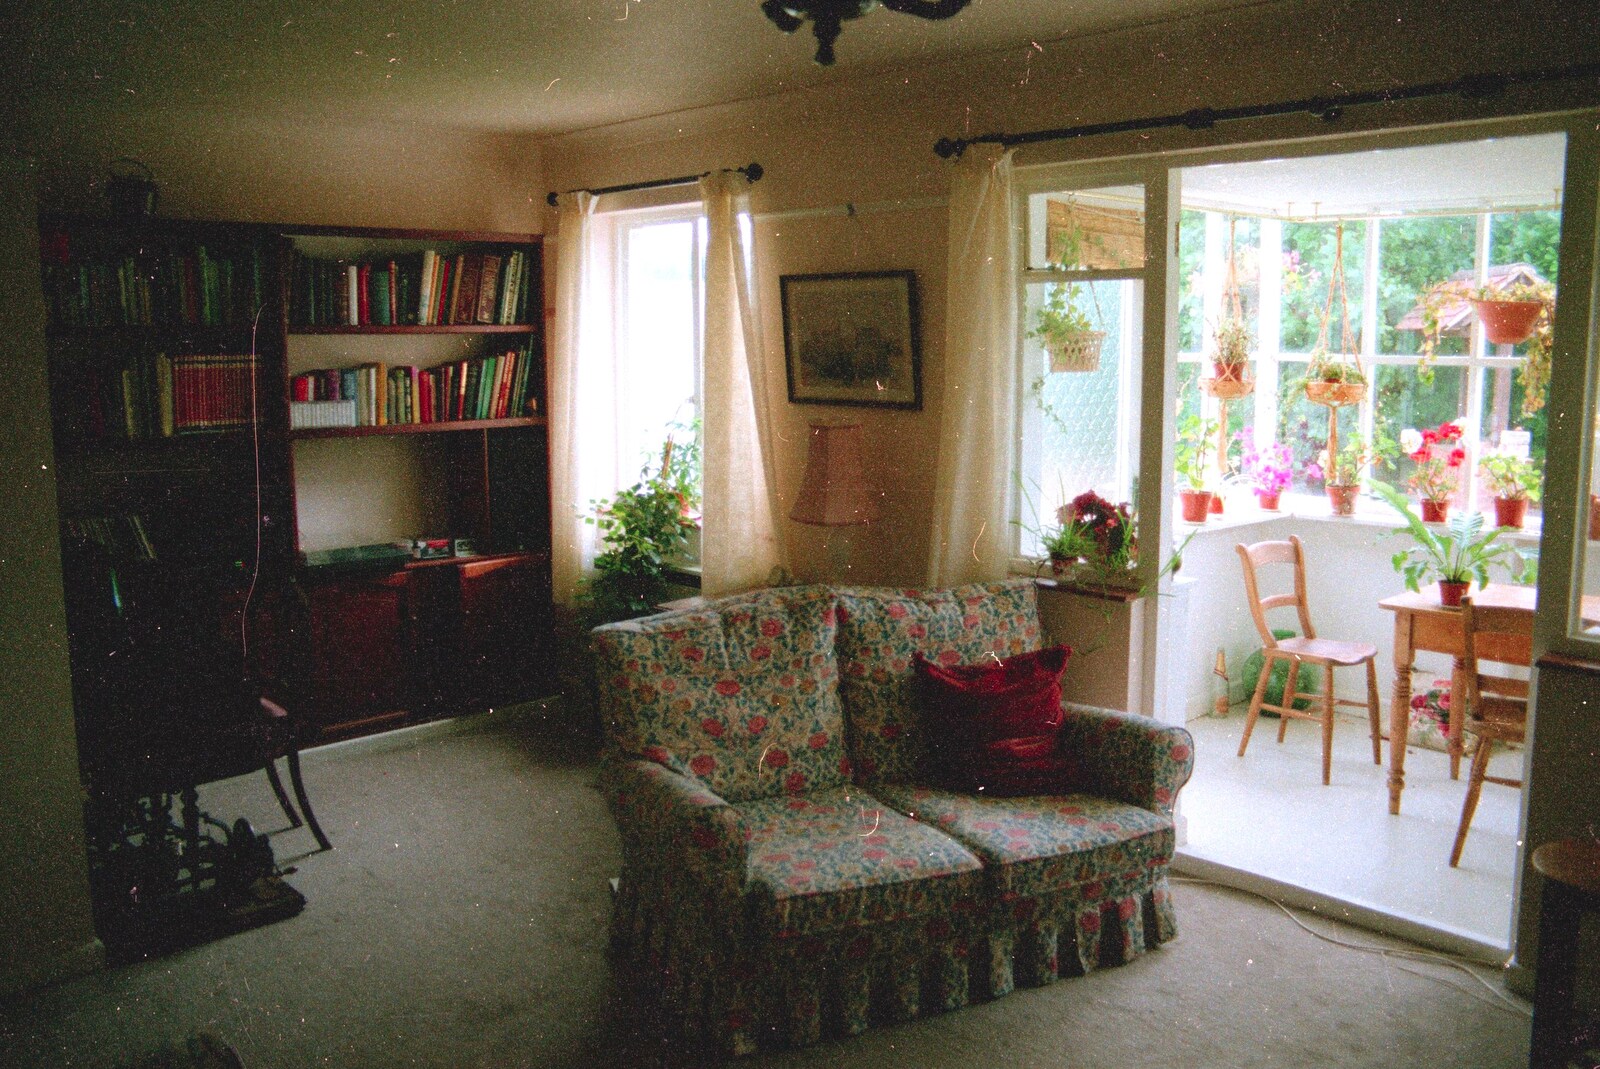 The lounge at Bracken Way from A Trip to Bracken Way, Walkford, Dorset - 8th September 1987